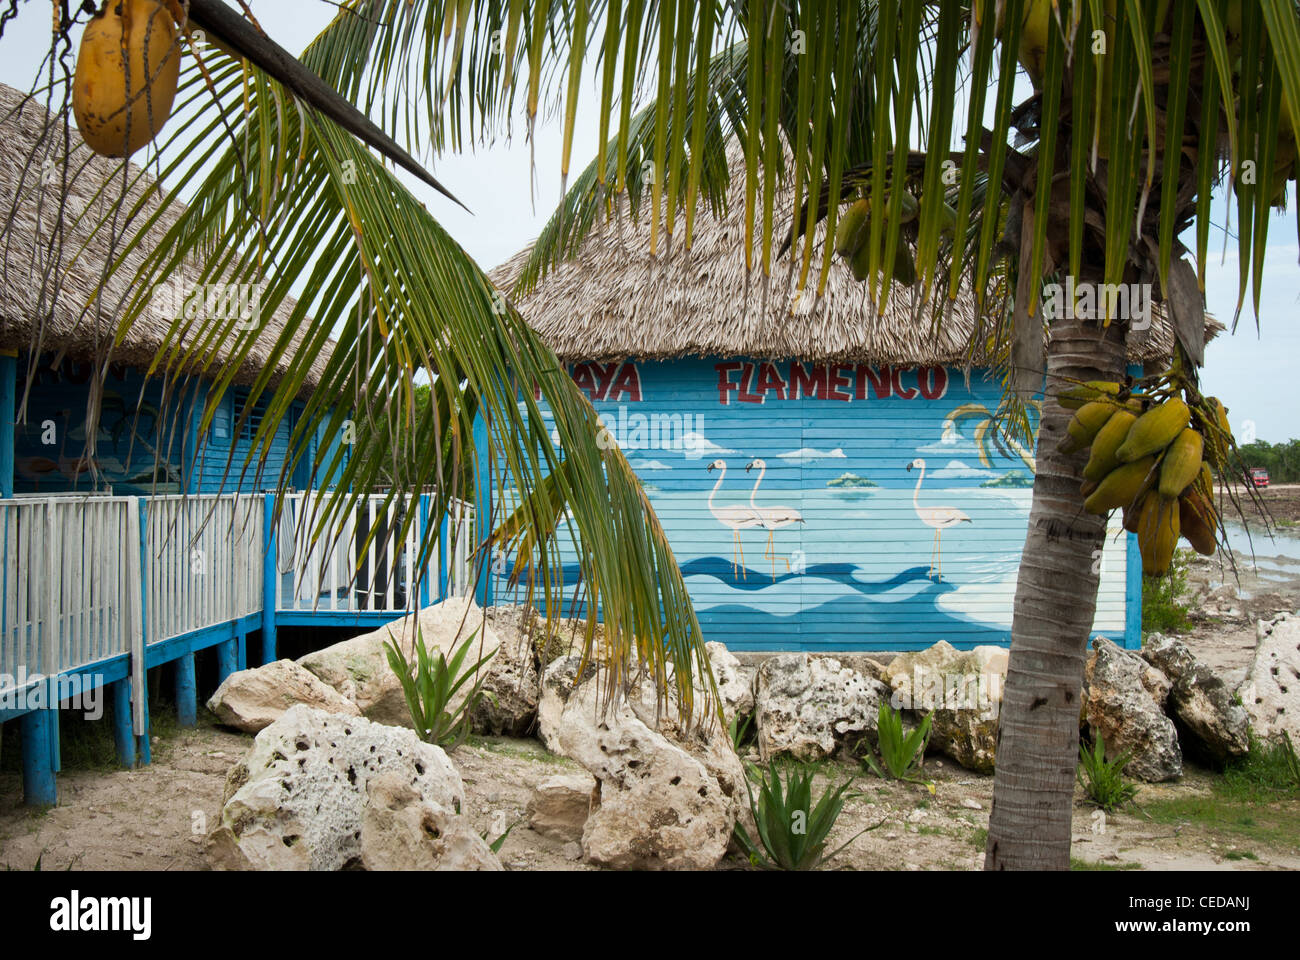 Writing on  a building: Playa Flamenco  Island of Cayo Coco, Ciego de Avila province, Cuba Stock Photo